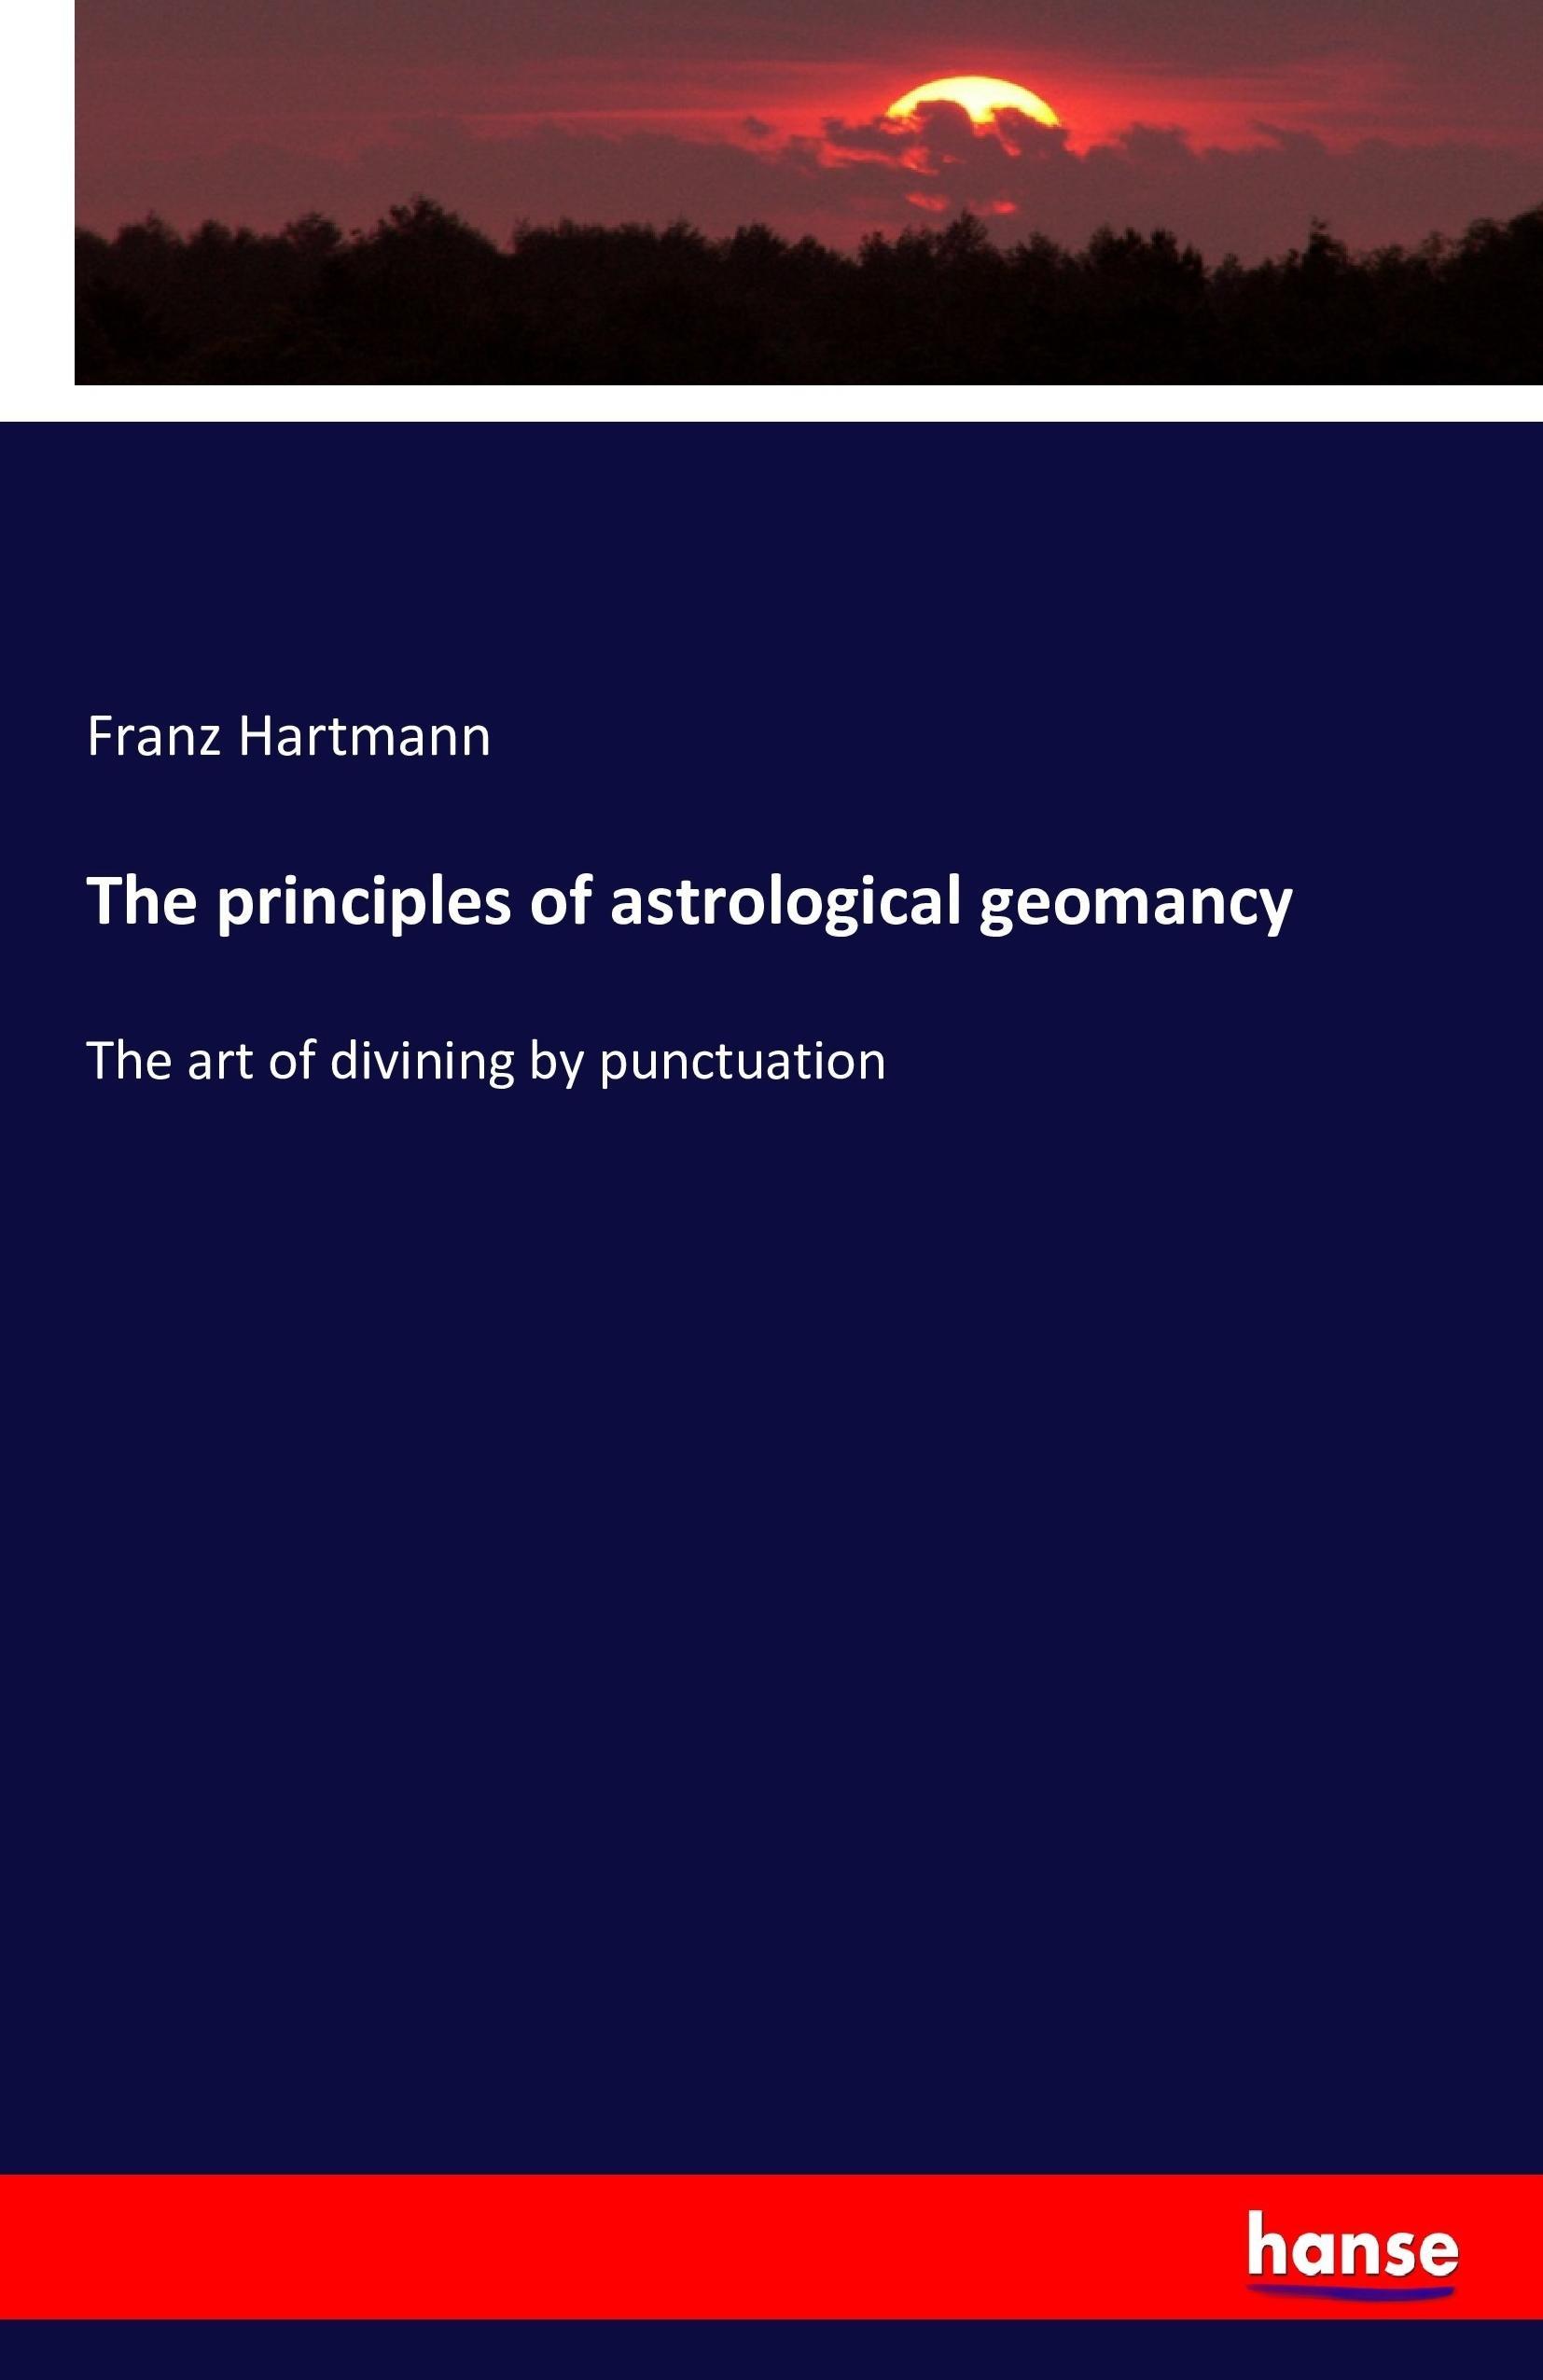 The principles of astrological geomancy | The art of divining by punctuation | Franz Hartmann | Taschenbuch | Paperback | 140 S. | Englisch | 2016 | hansebooks | EAN 9783742830159 - Hartmann, Franz